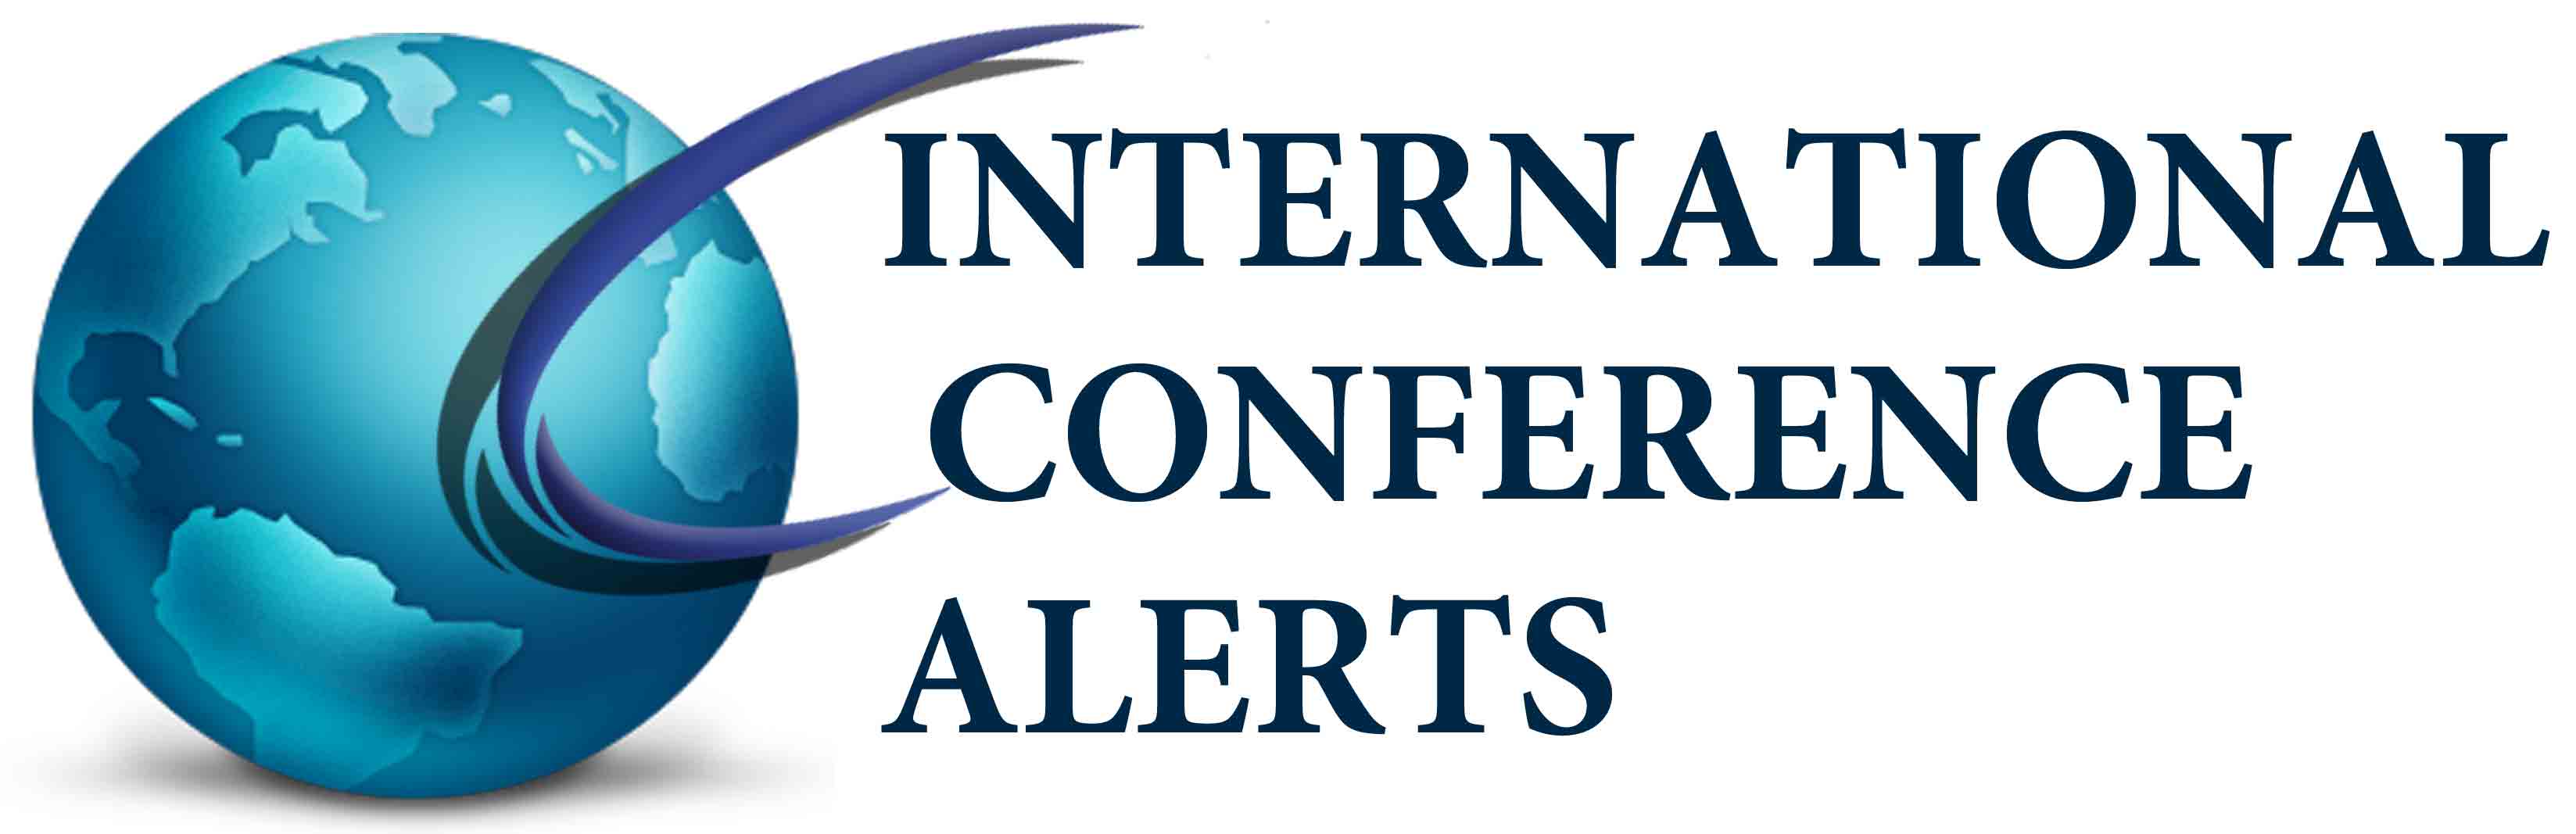 ~International Conference Alerts